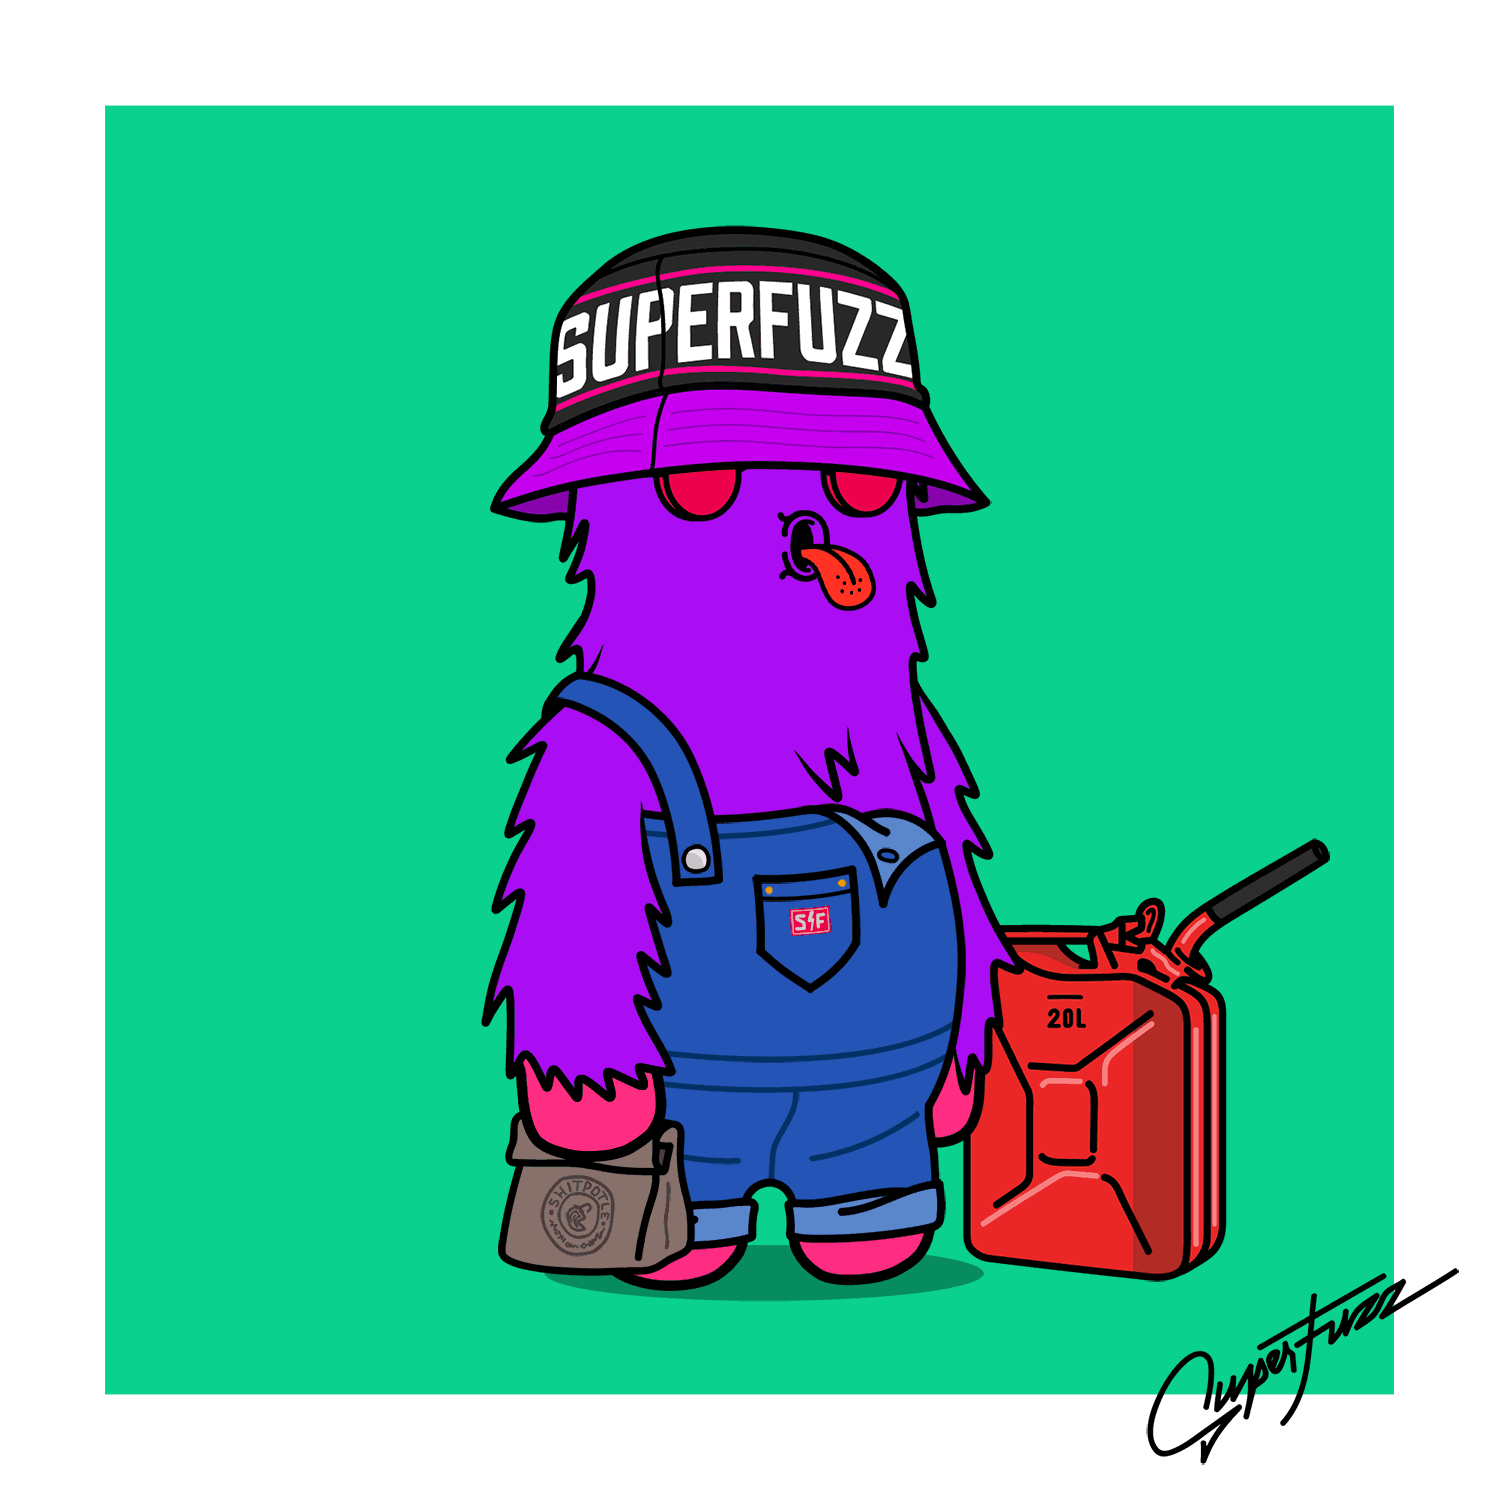 Superfuzz: The Good Guys #986